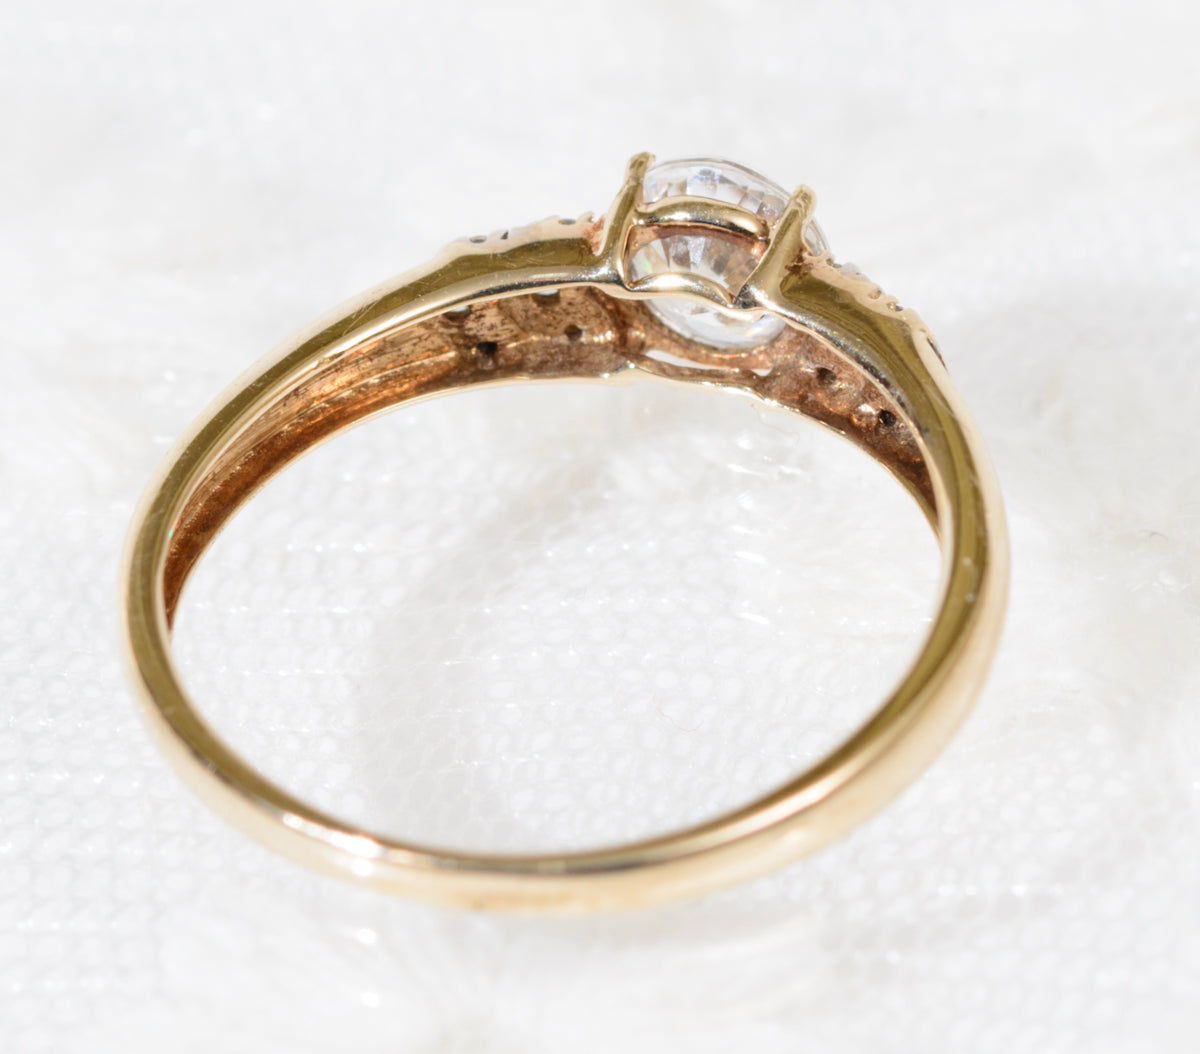 9ct Gold Solitaire Ring With Accents White Zircon Gemstones Birmingham Hallmark (A1913)